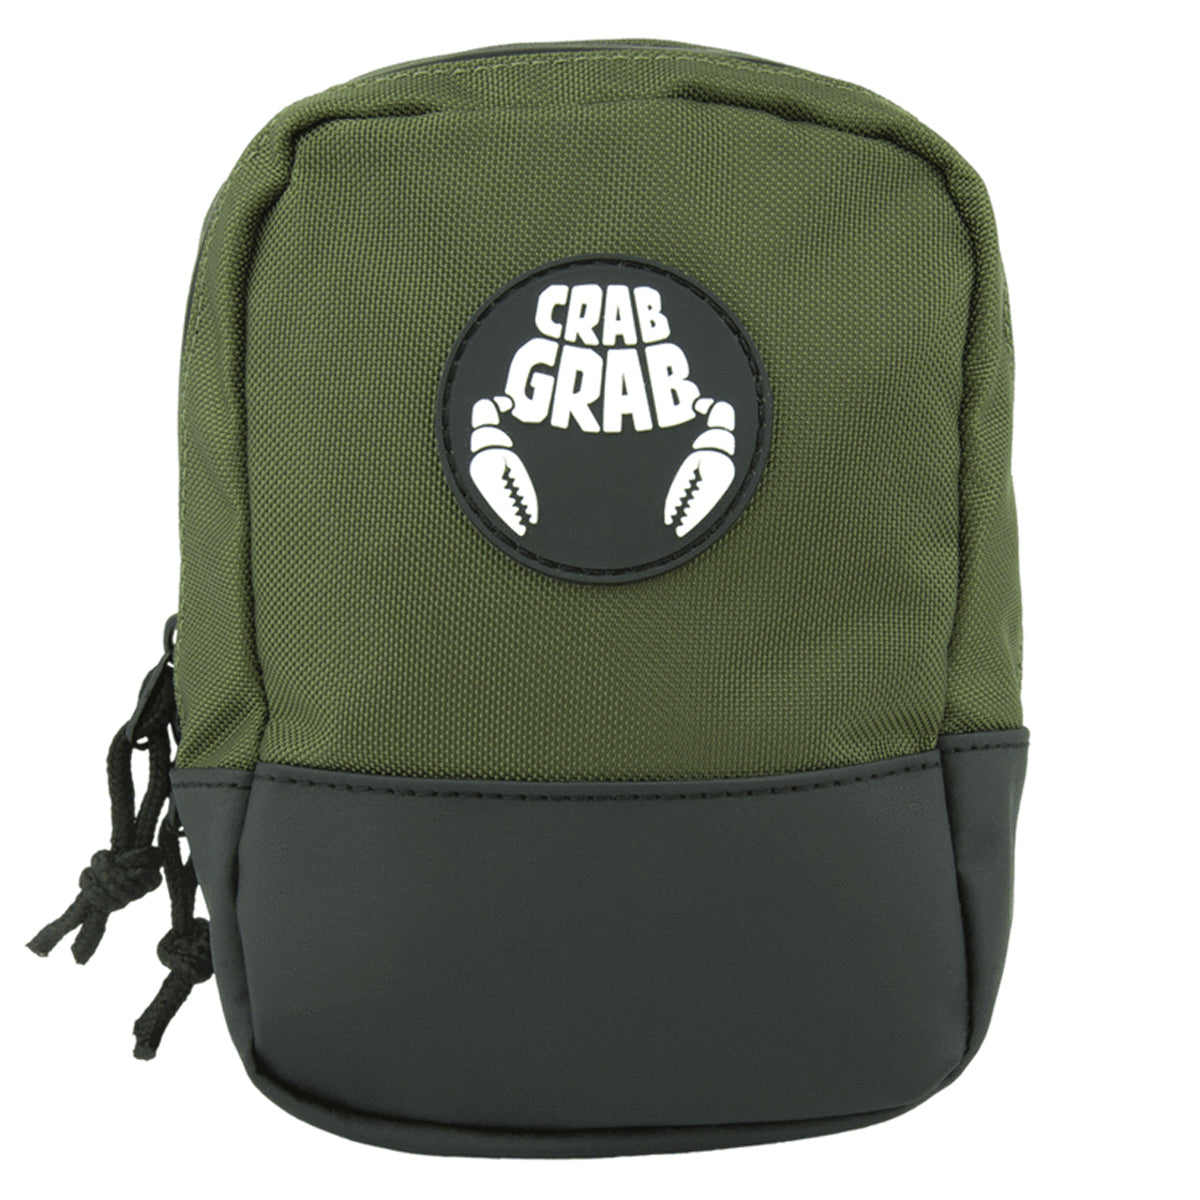 Crab Grab Binding Bag - Army Green image 1